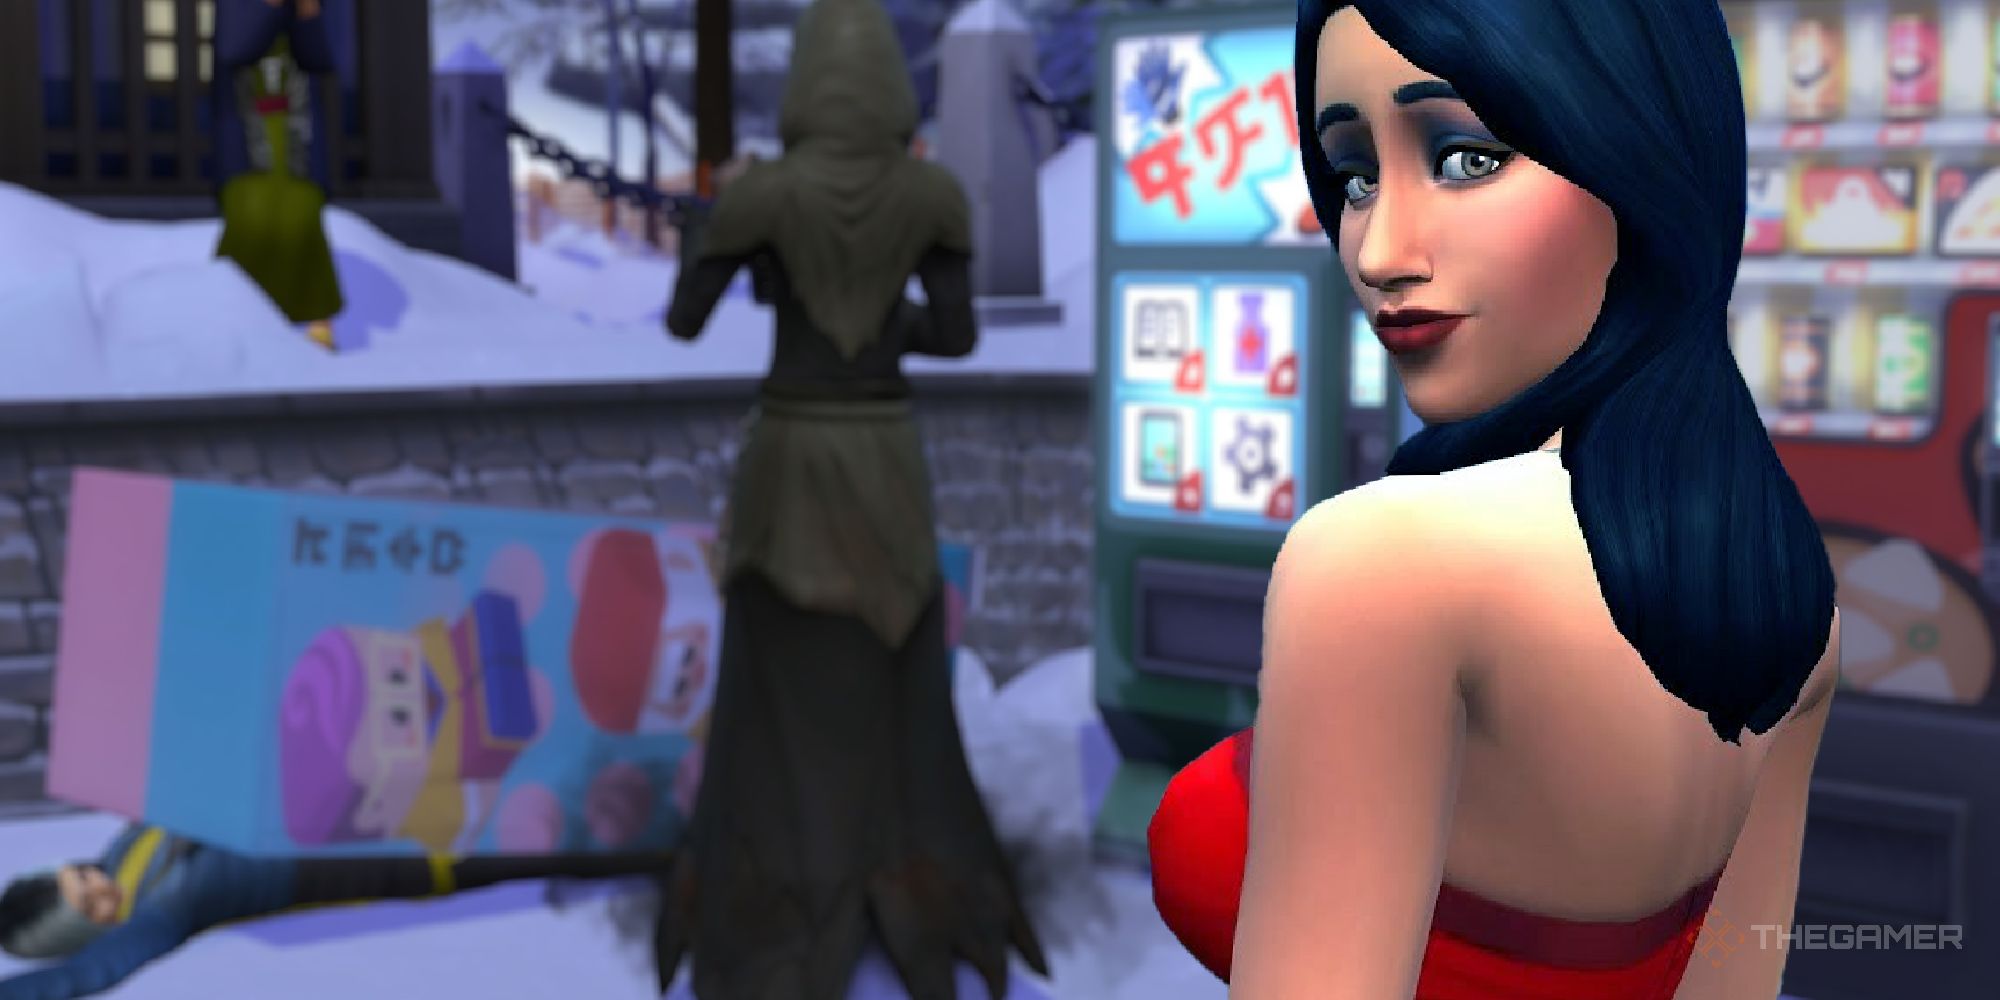 Bella goth in front of a Sim death by vending machine